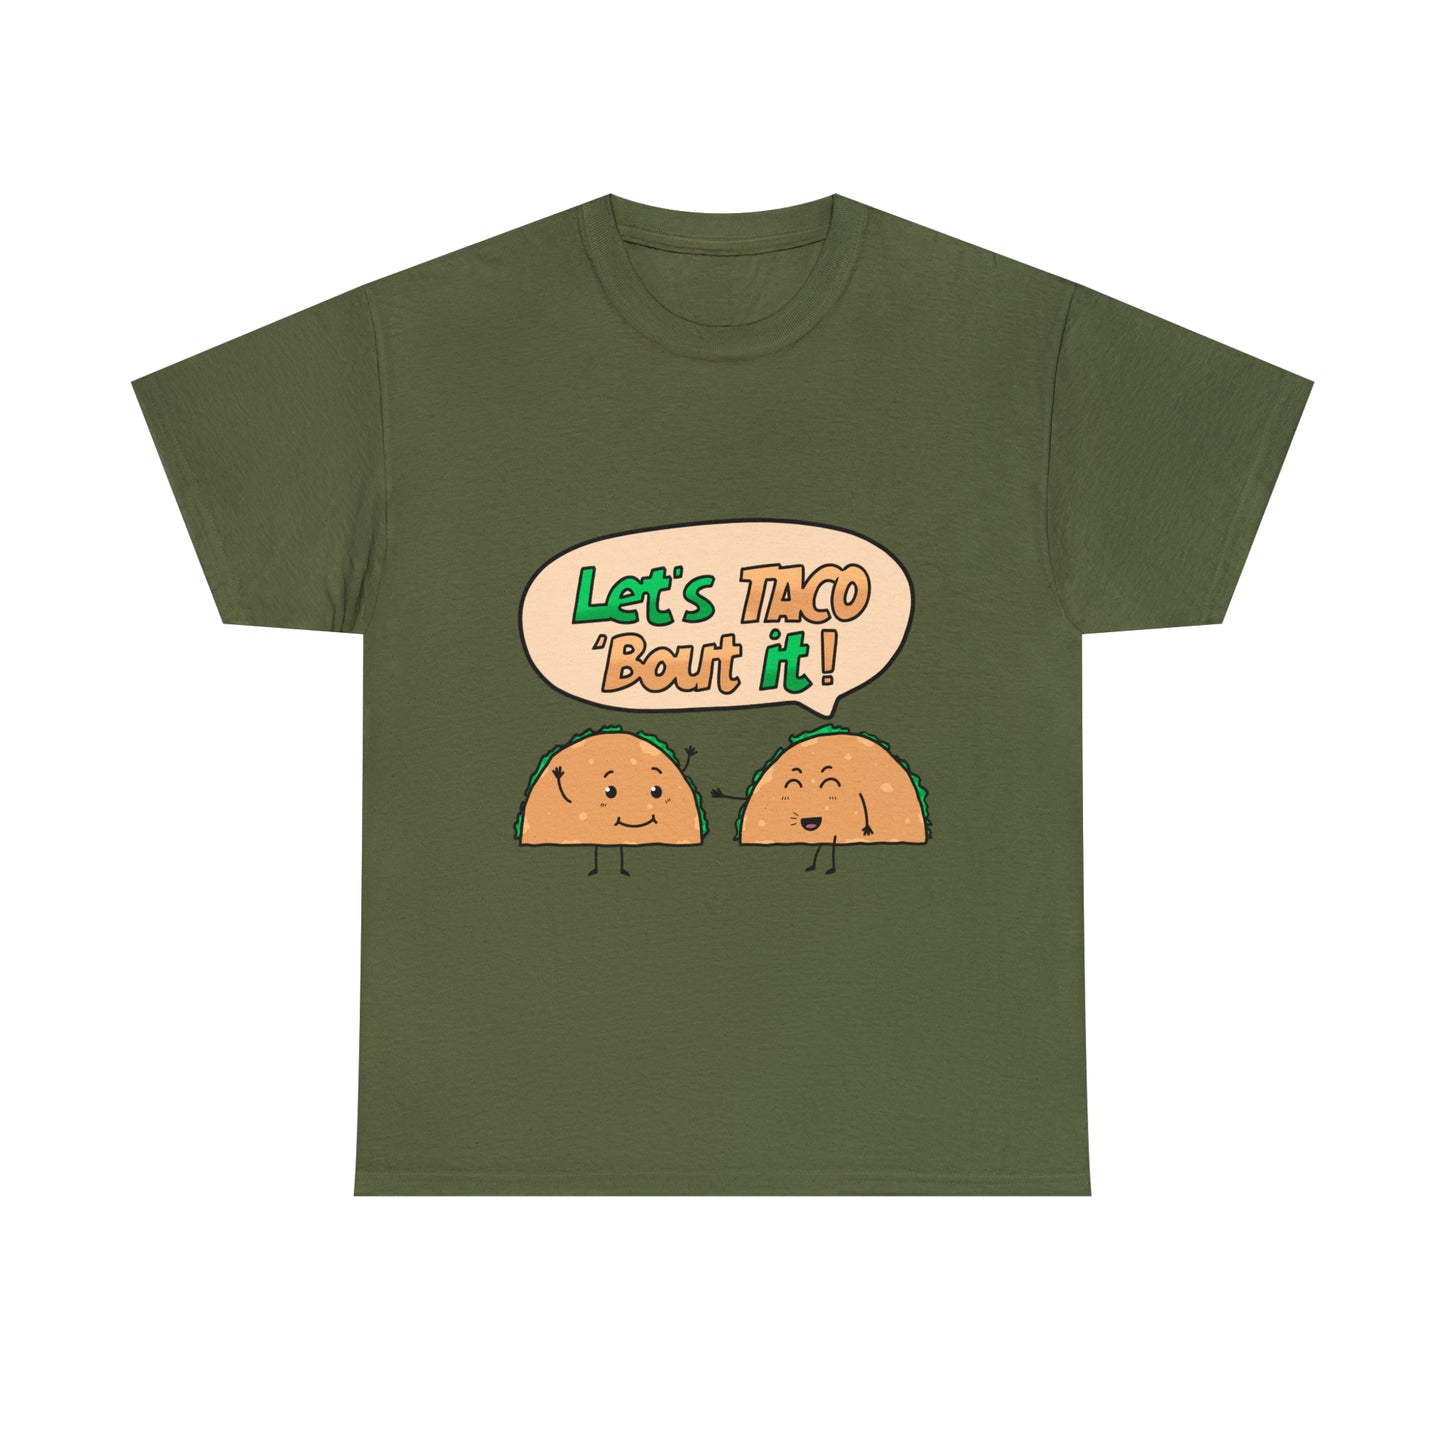 Custom Parody T-shirt, Let's TACO' bout it design